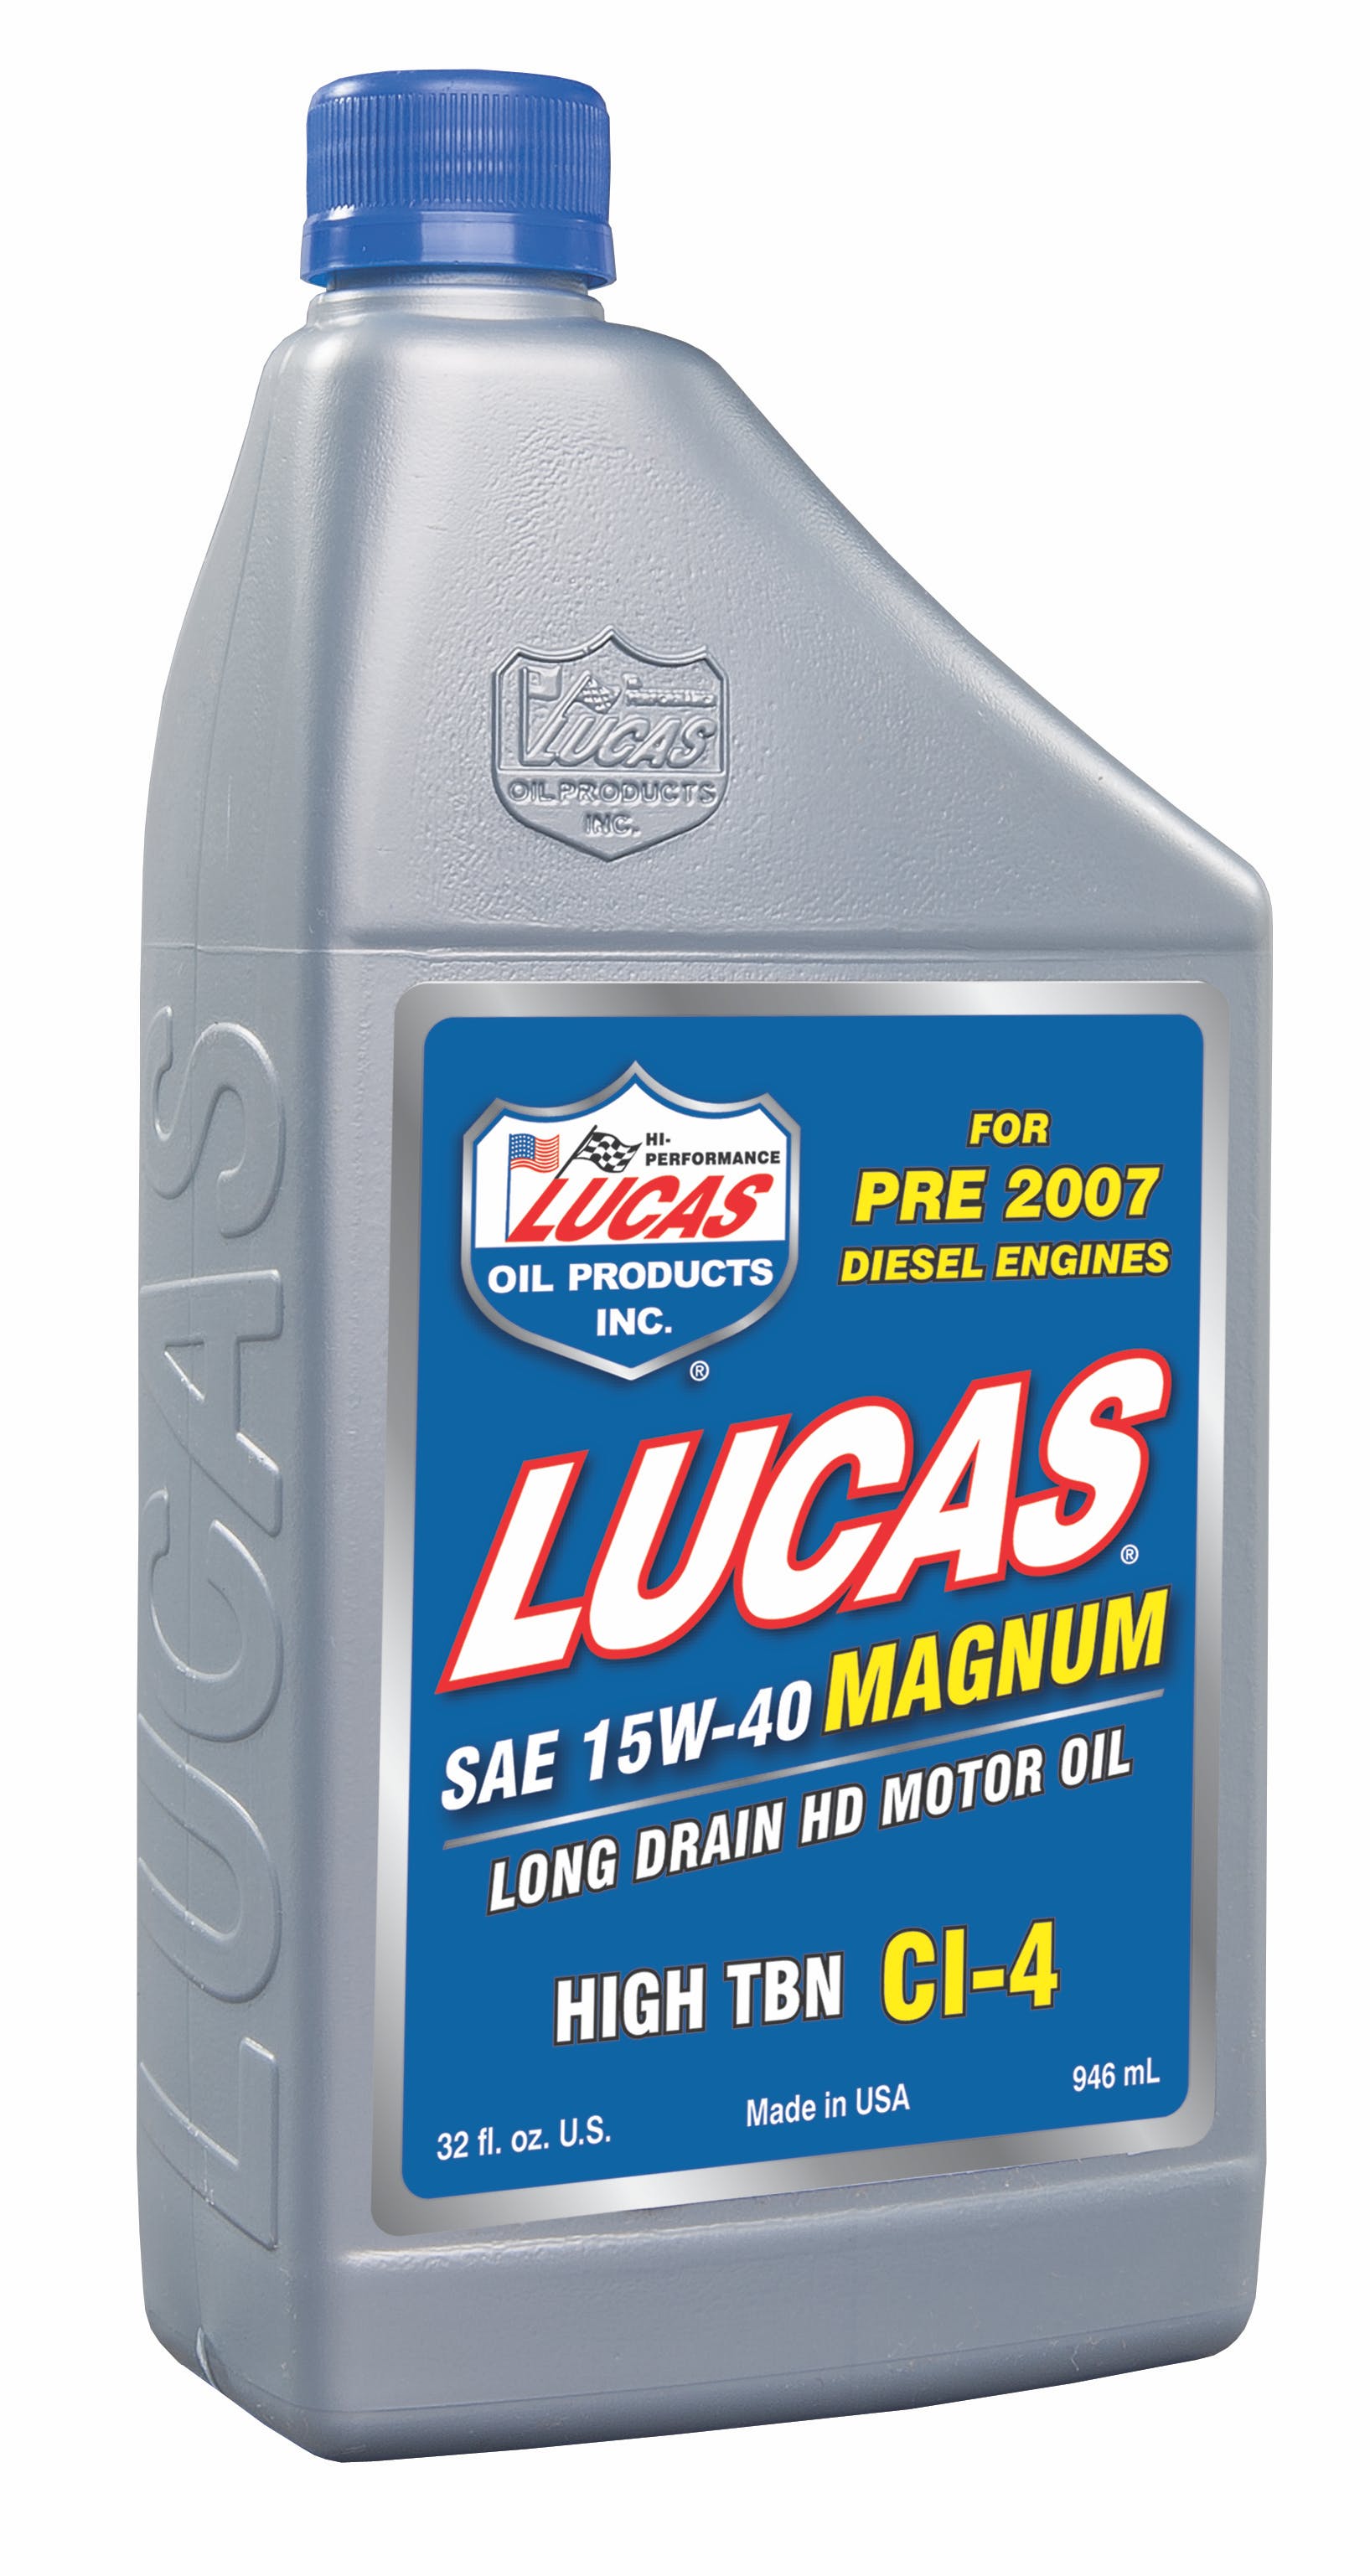 Lucas OIL SAE 15W-40 Magnum Motor Oil (1 QT) 20075